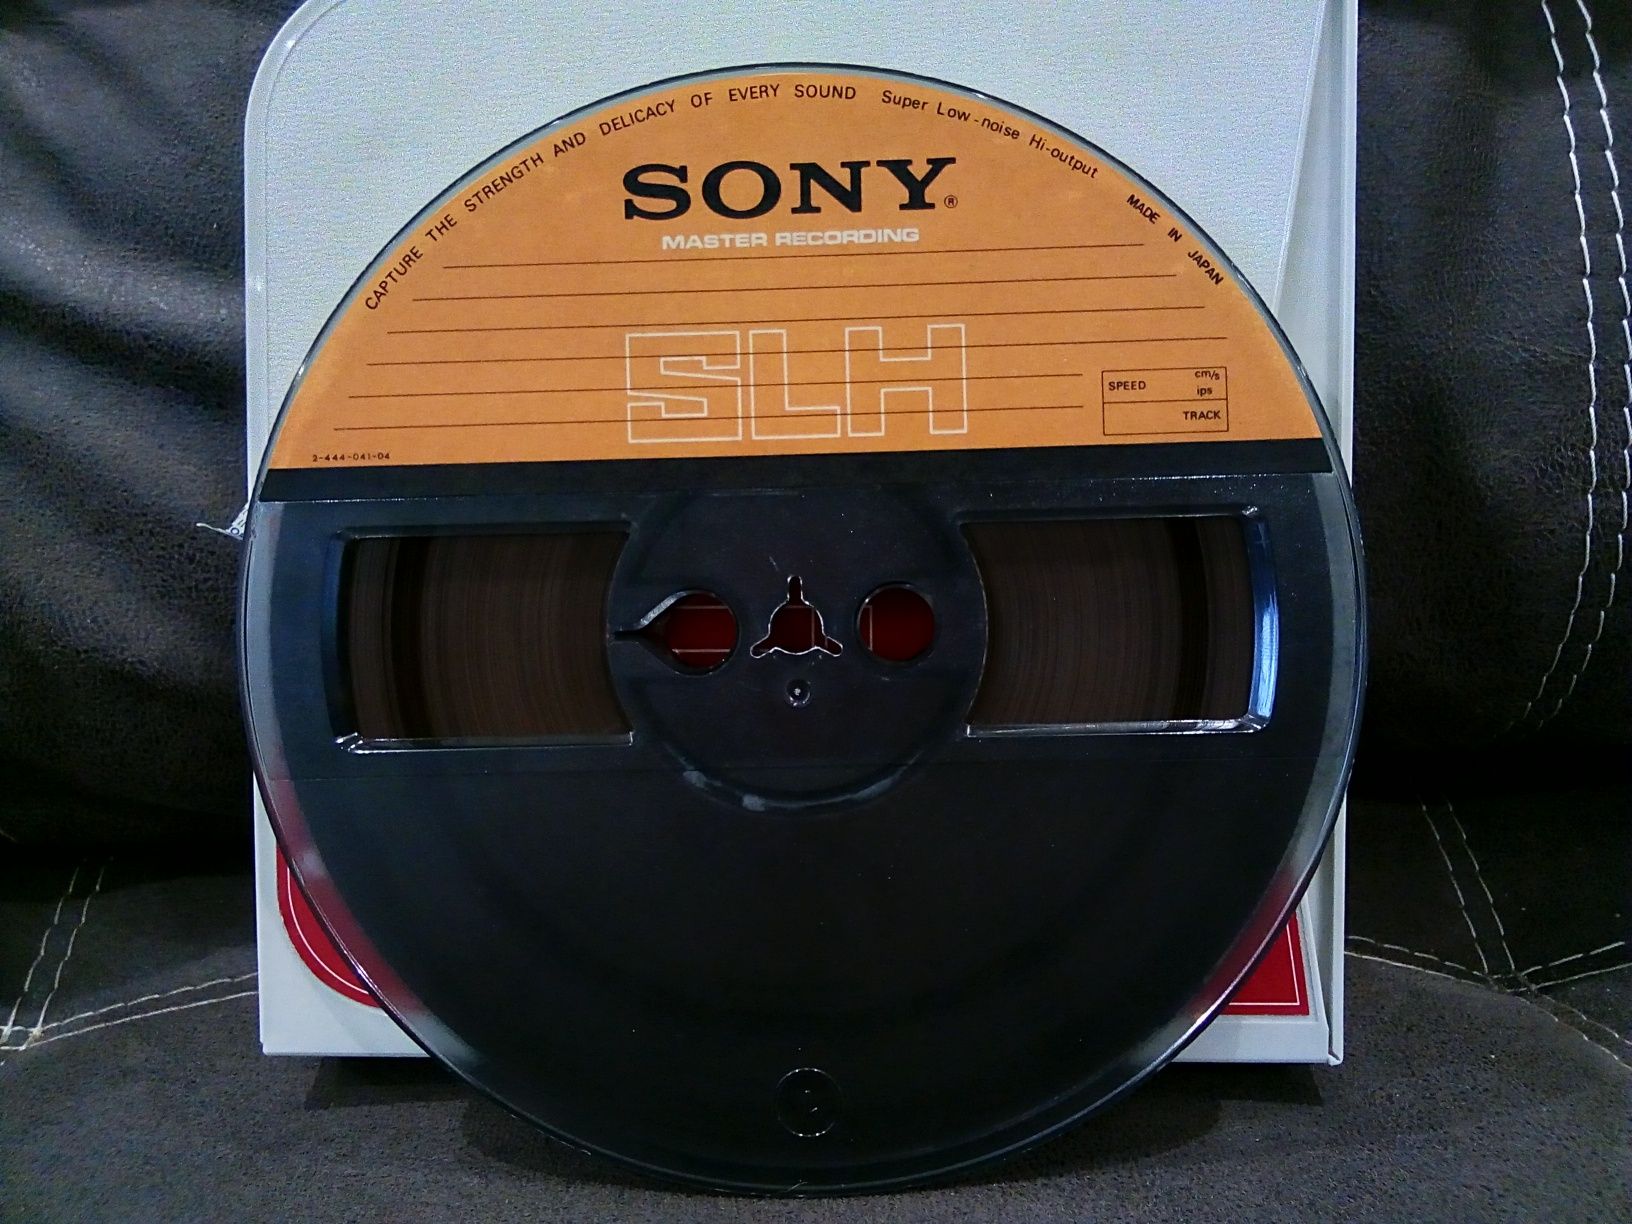 Sony SLH  18 cm 550 m master recording tape